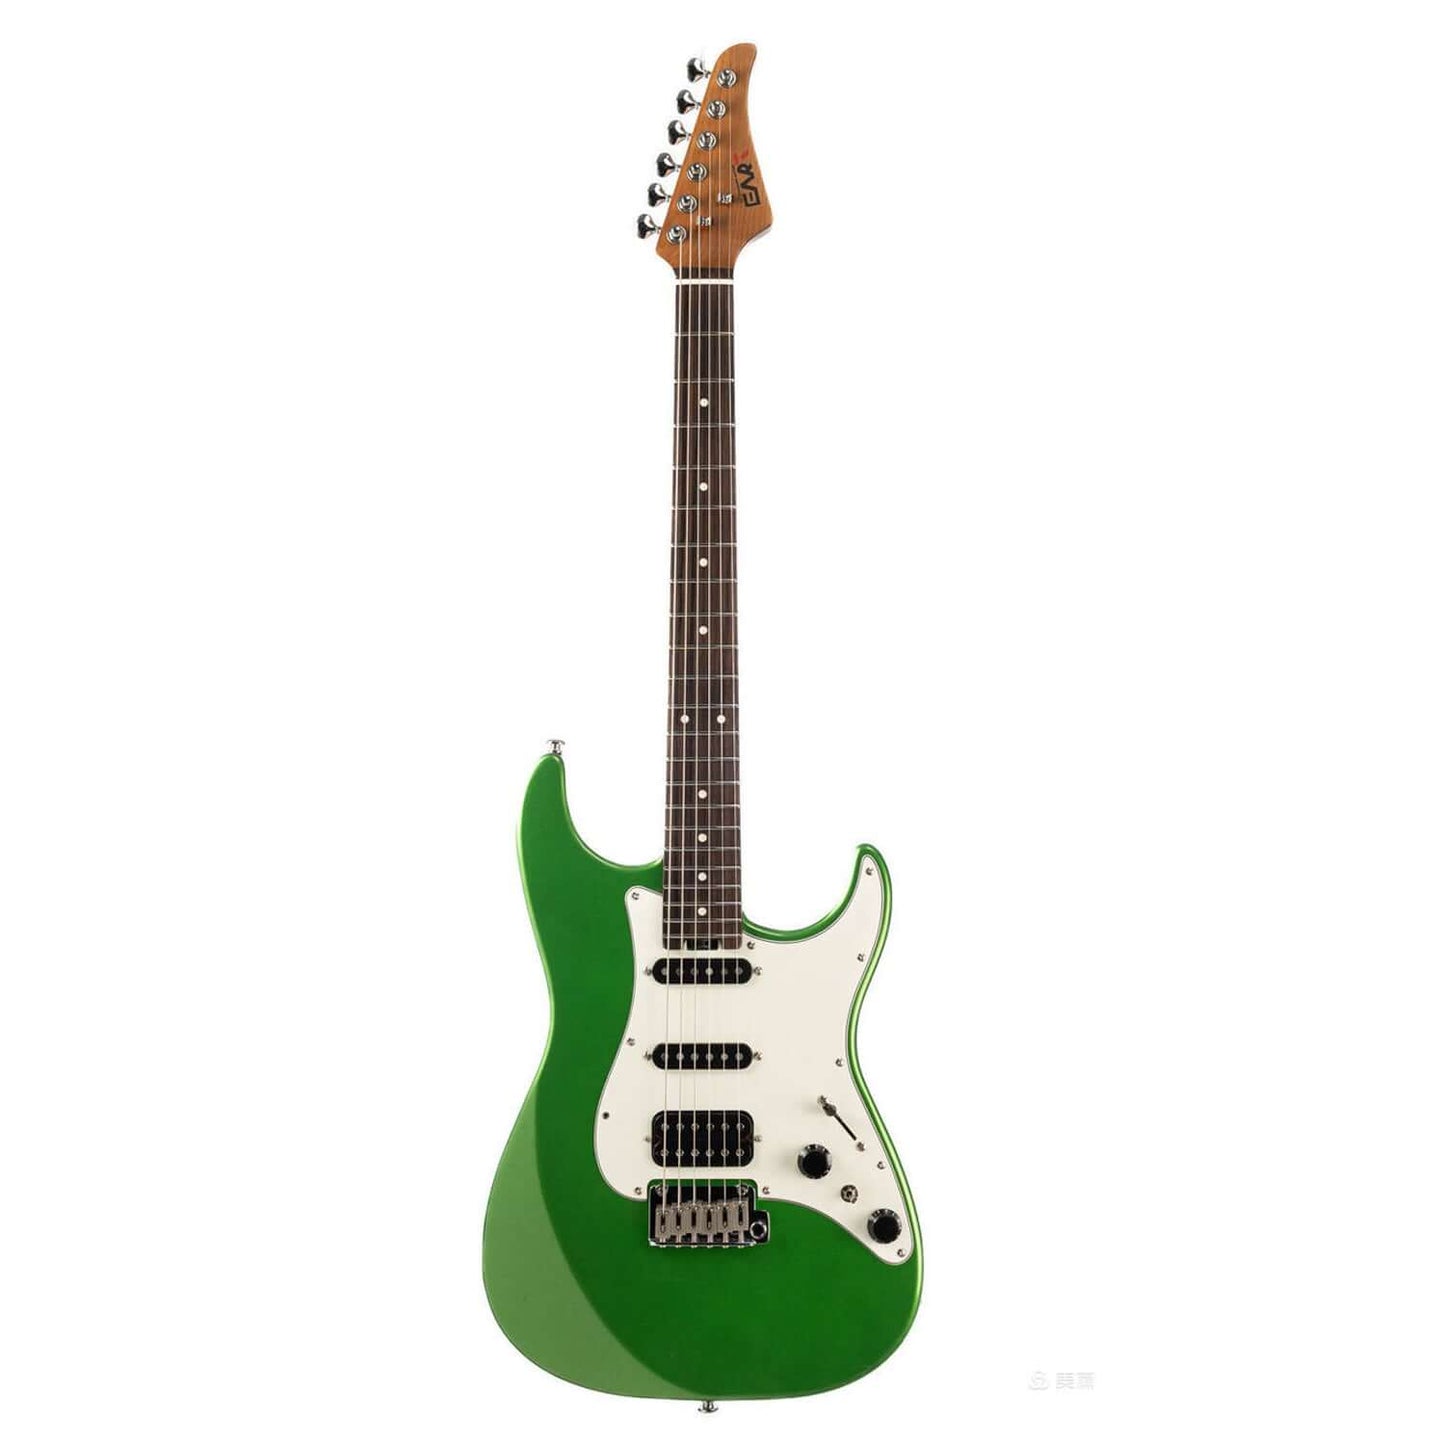 EART DMX-9 electric guitar green